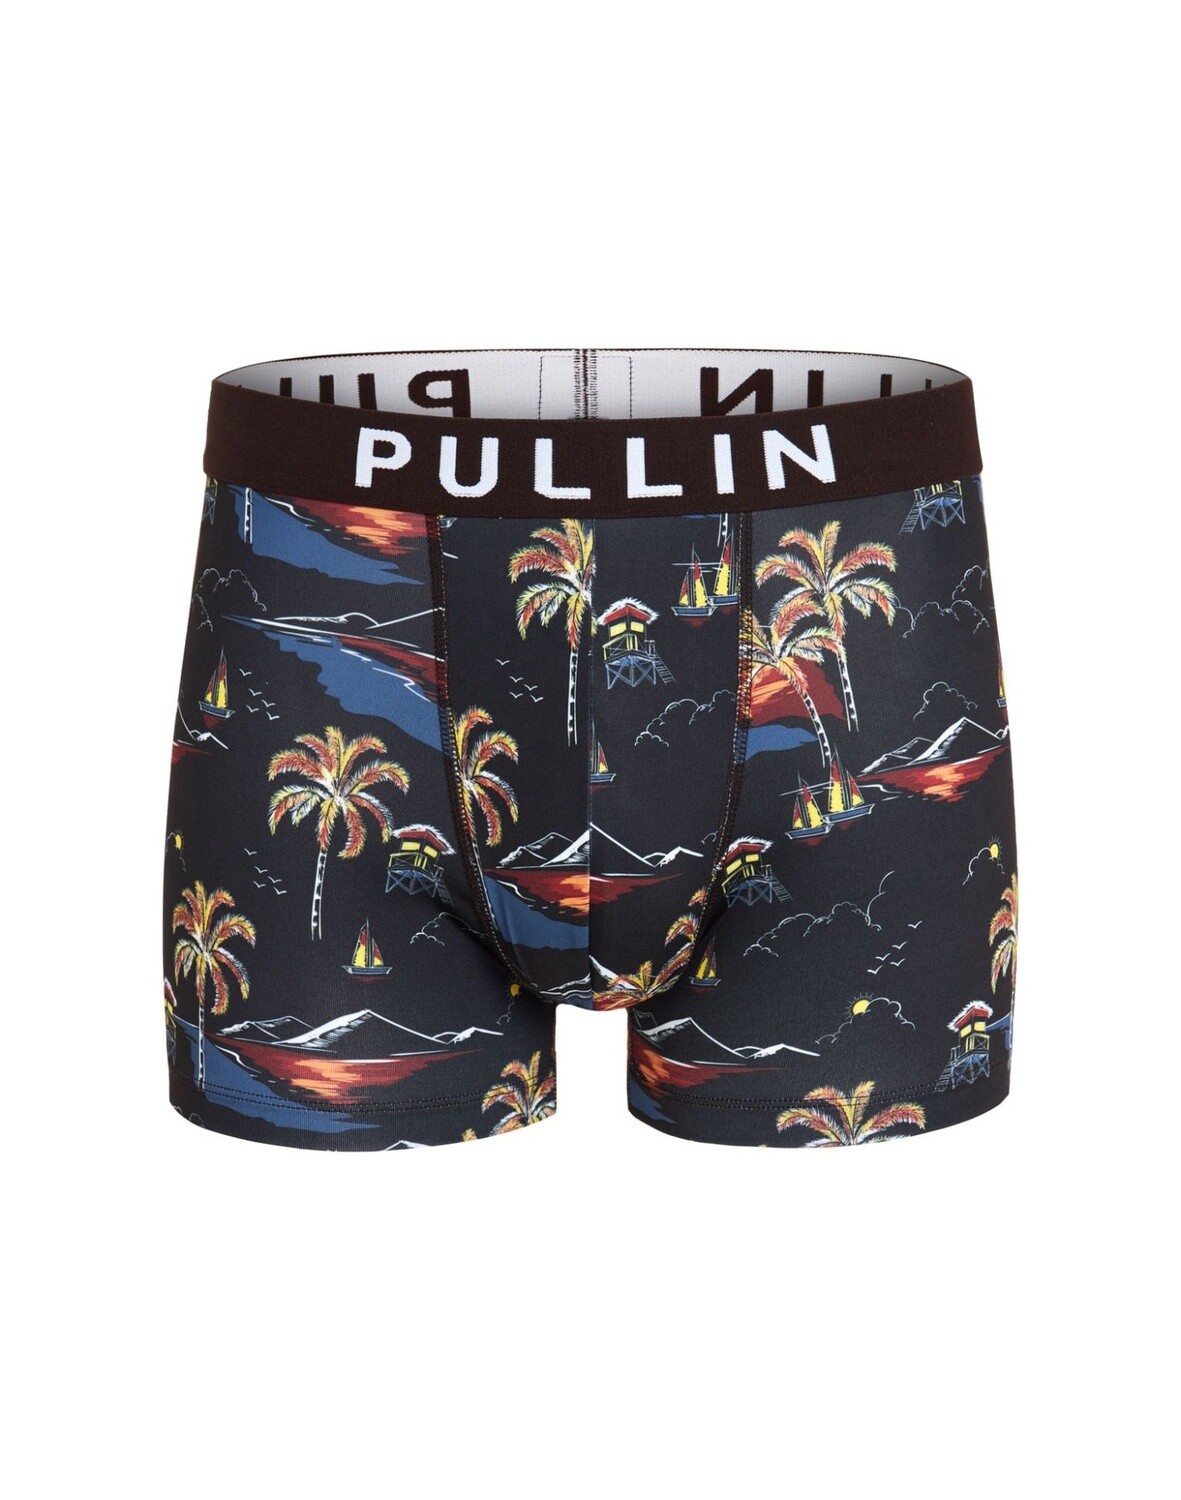 Pullin Underwear - Master - Volcano